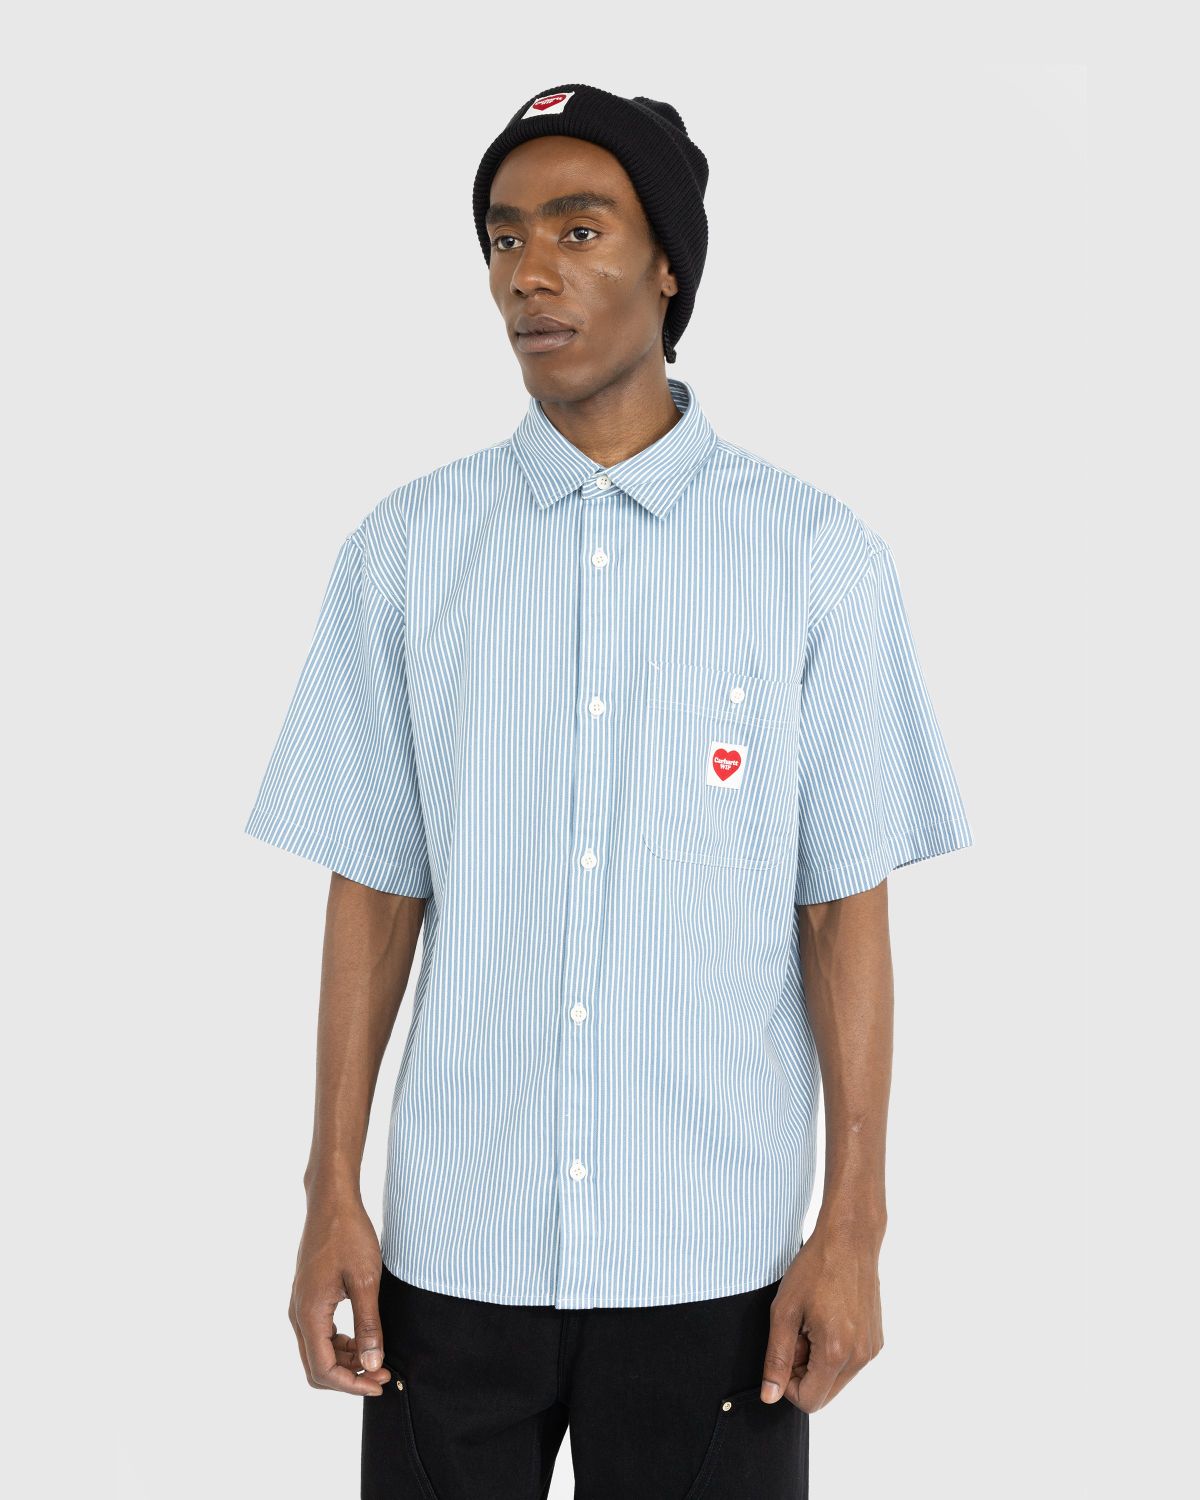 Carhartt WIP – Terrell Shirt Beige | Highsnobiety Shop